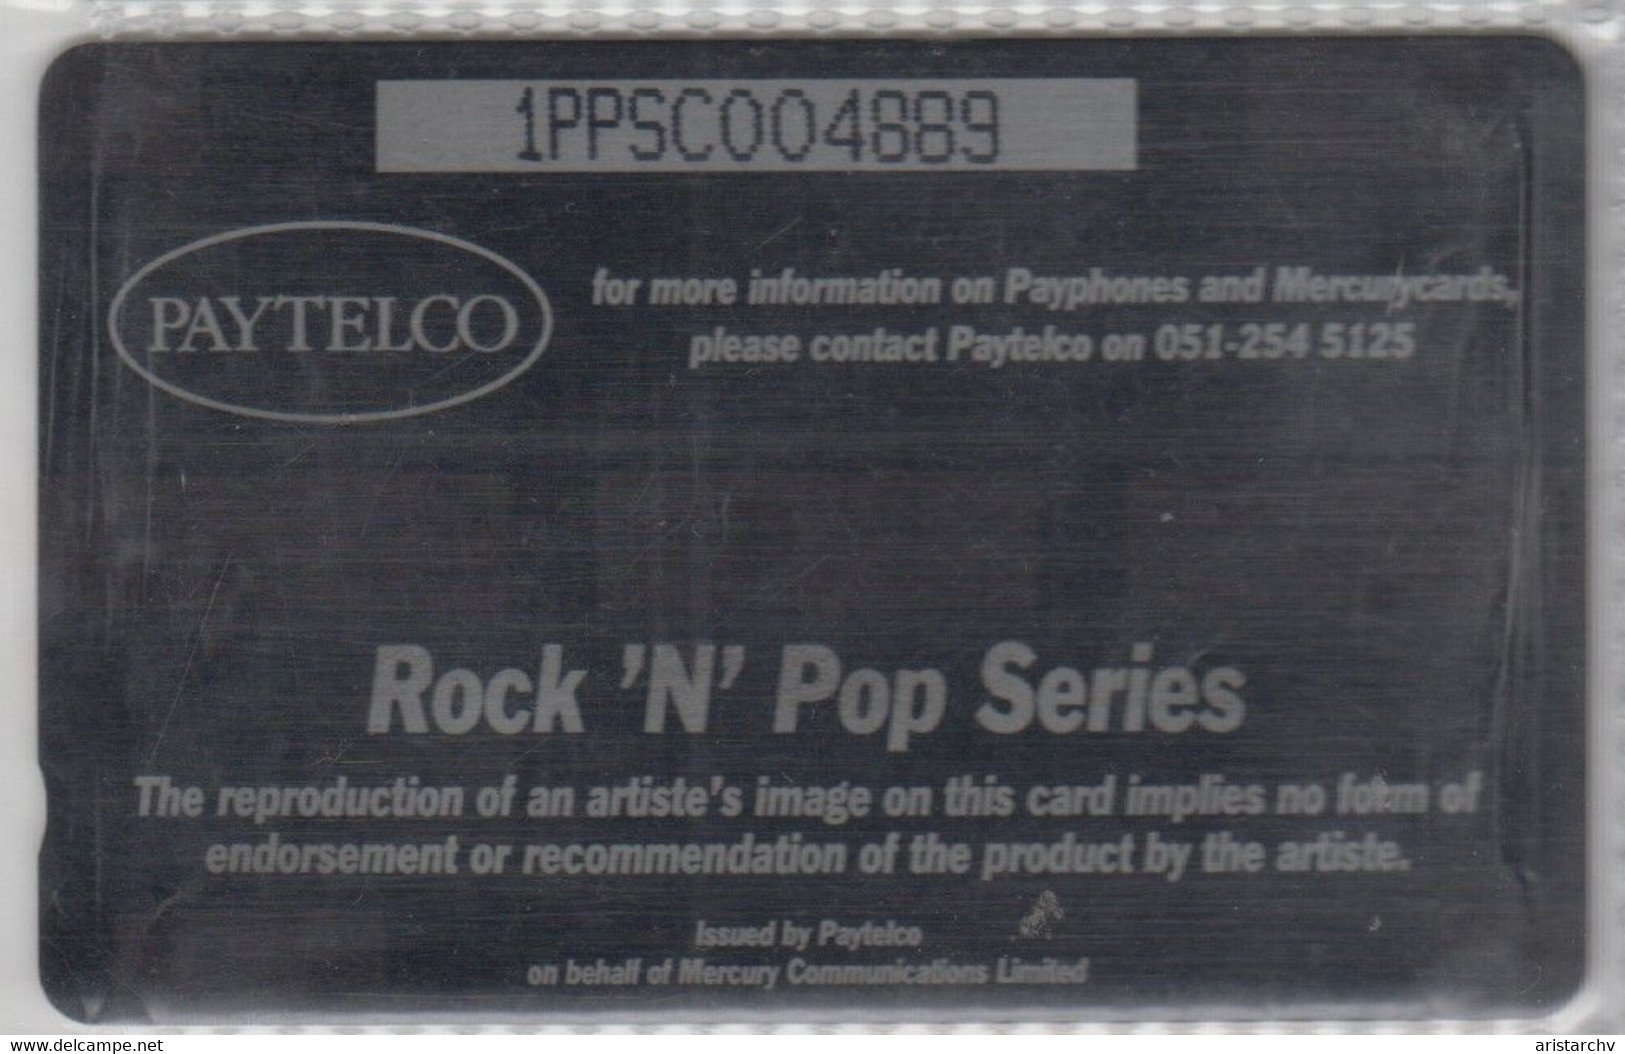 UNITED KINGDOM MERCURY ROCK "N" POP STONE ROSES - Mercury Communications & Paytelco